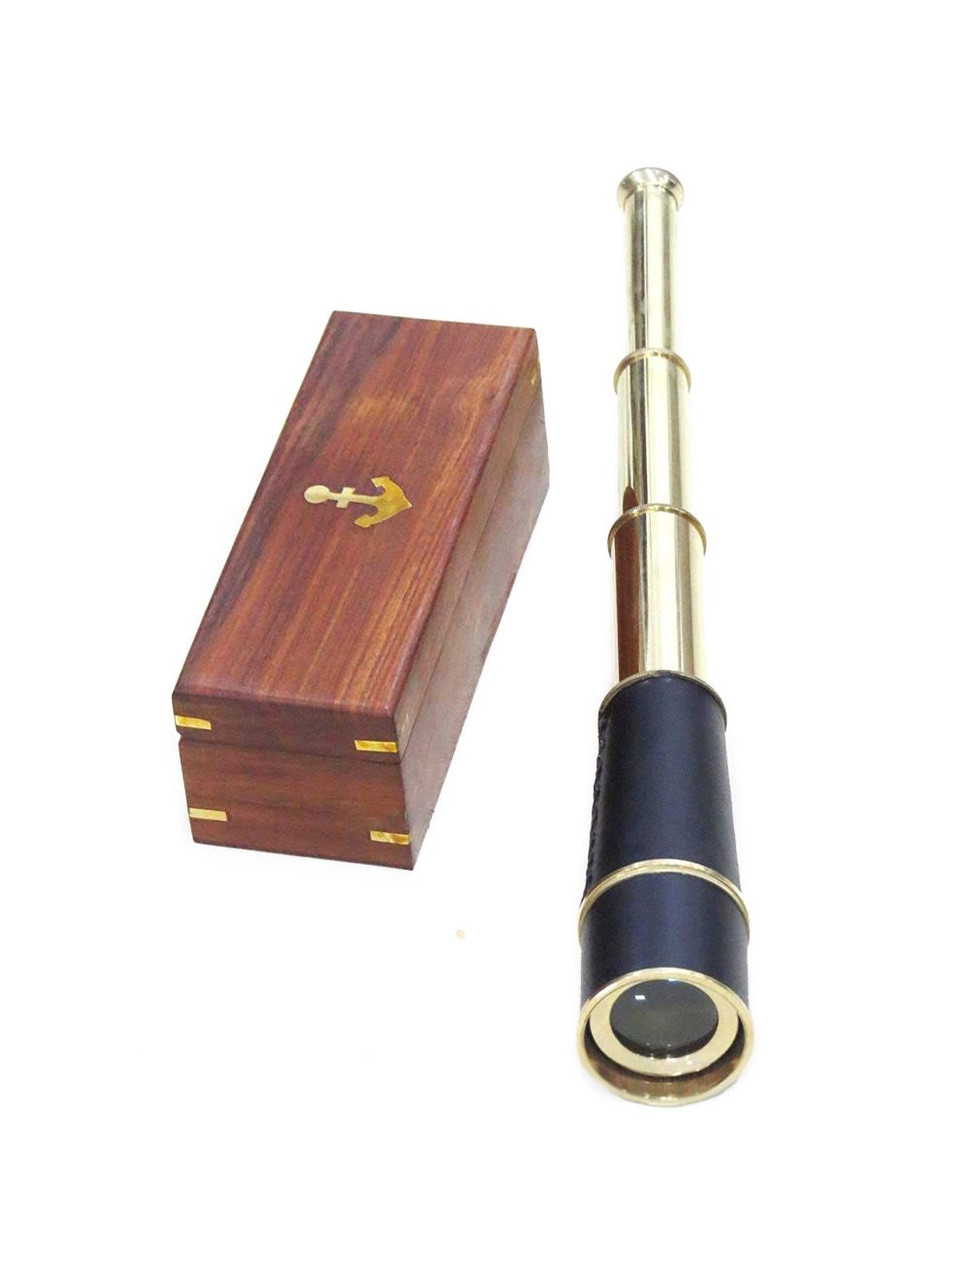 Brass Pirate Spyglass Wooden Case Handheld Telescope